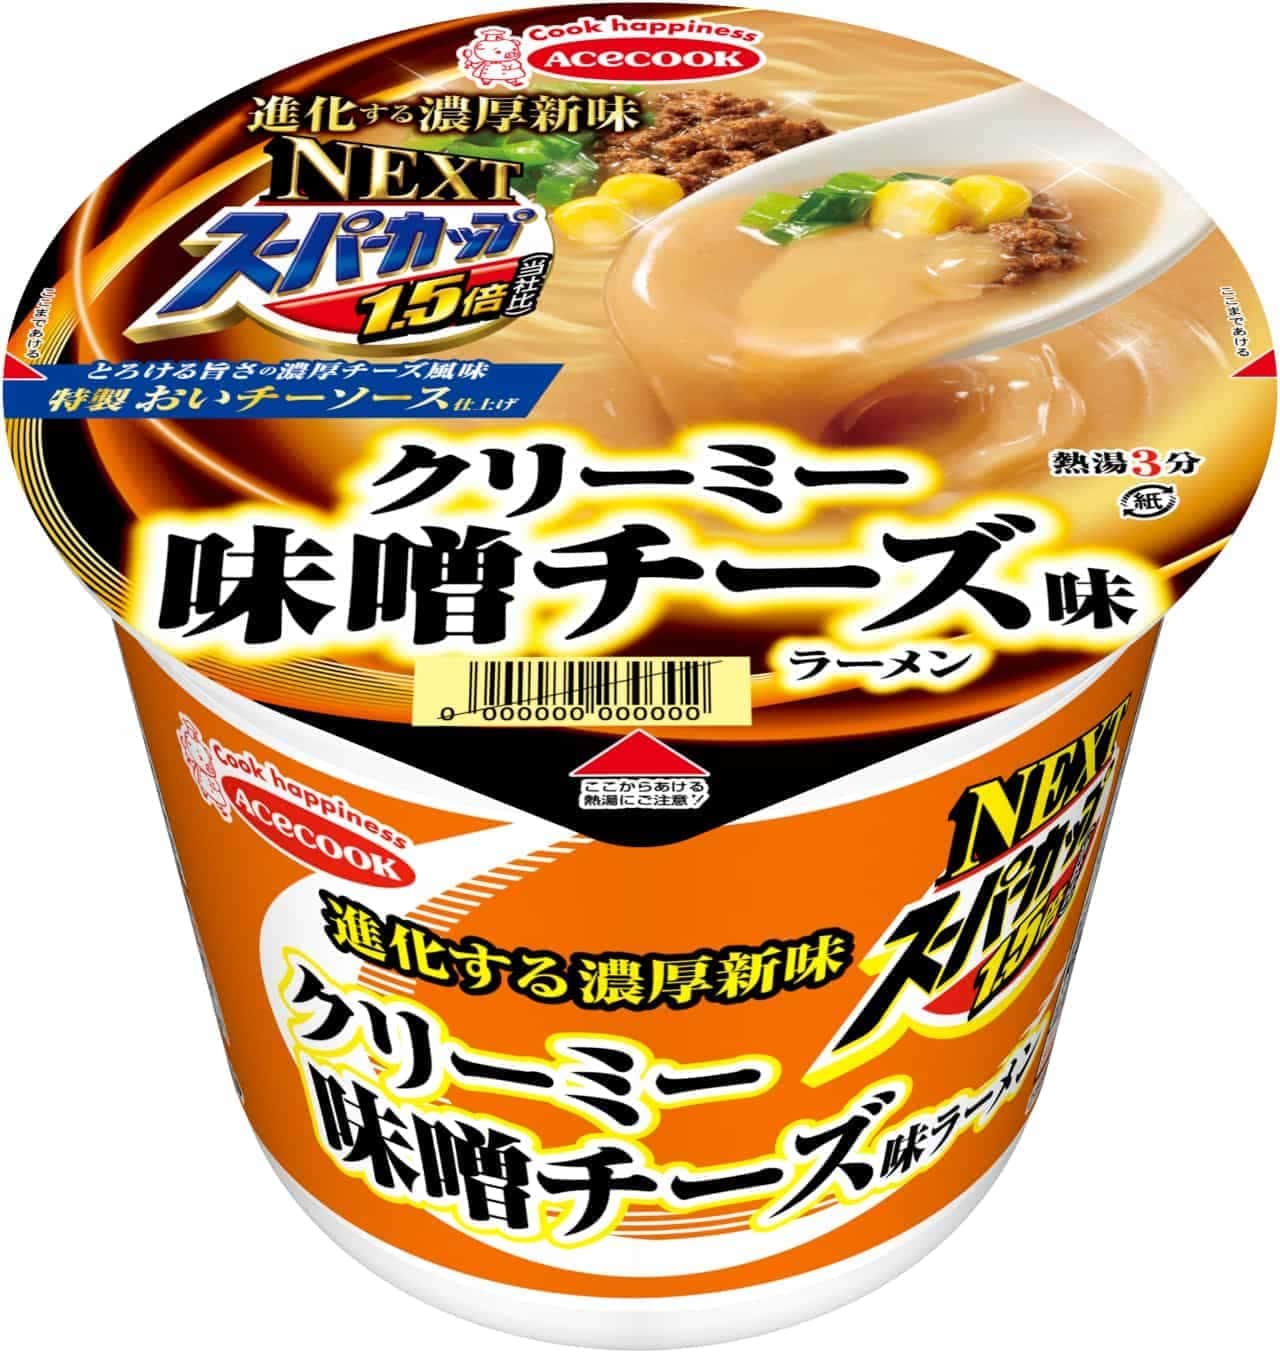 Acecock "Super Cup 1.5x NEXT Creamy Seafood Flavored Ramen / Creamy Miso Cheese Flavored Ramen"